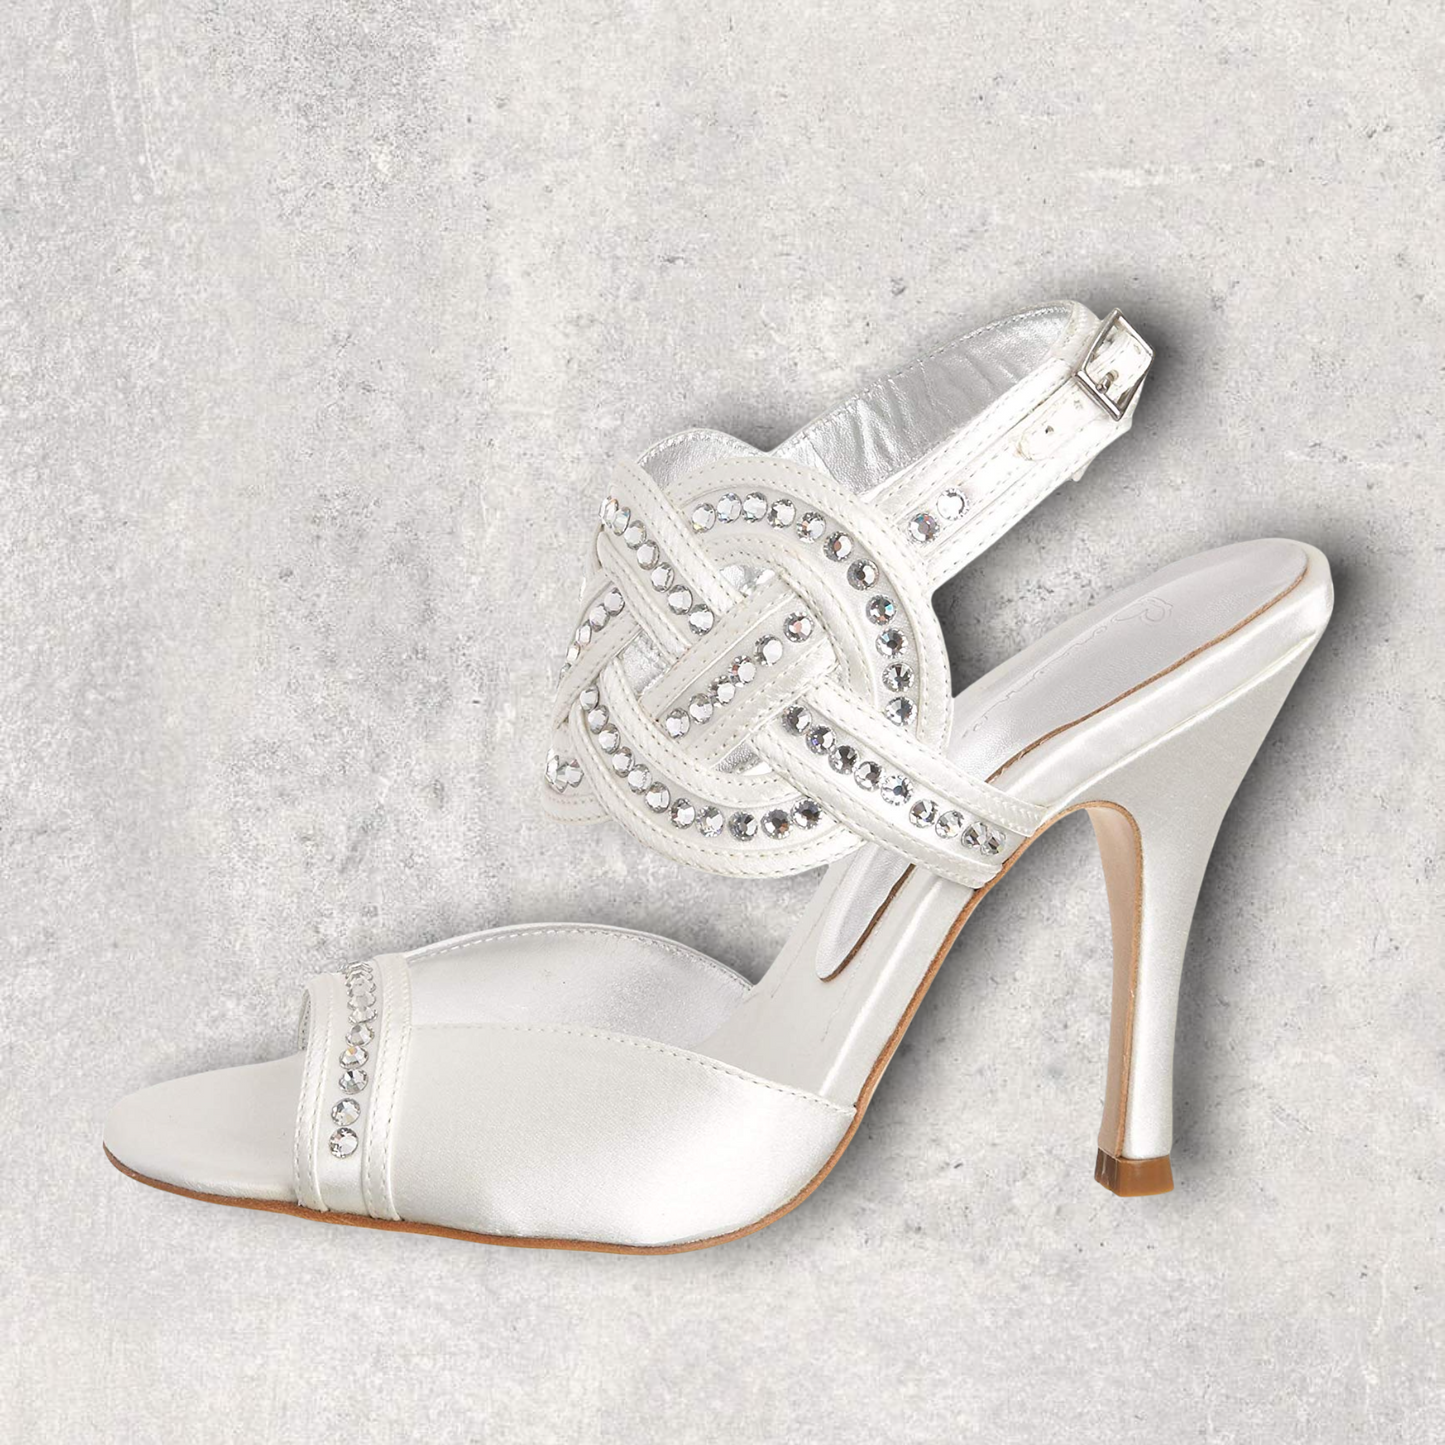 Bourne Tiffany Ivory Satin Heel Bridal Shoes UK 7 BNIB Timeless Fashions